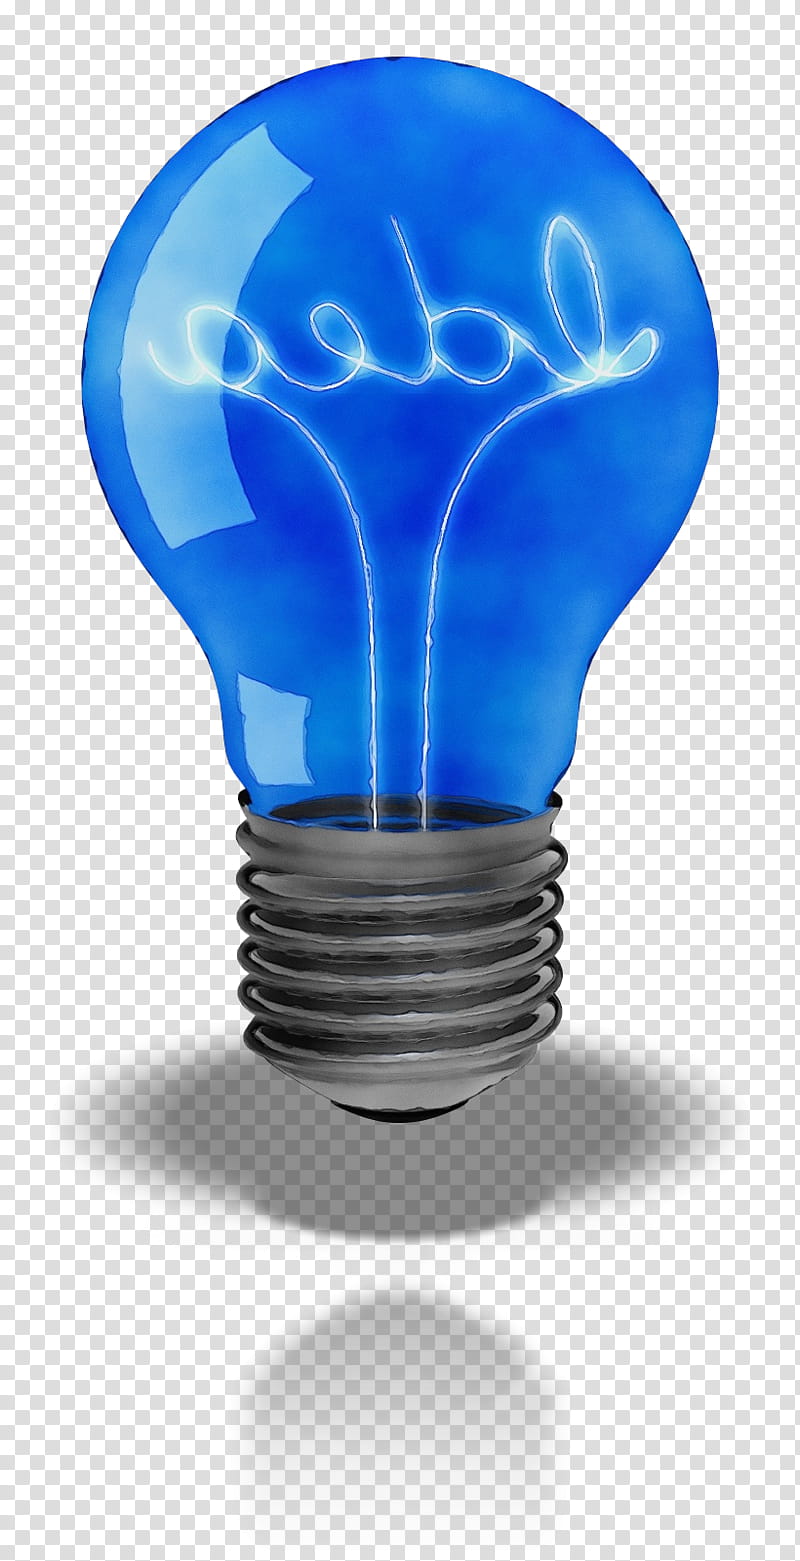 Light bulb, Watercolor, Paint, Wet Ink, Incandescent Light Bulb, Blue, Lighting, Fluorescent Lamp transparent background PNG clipart